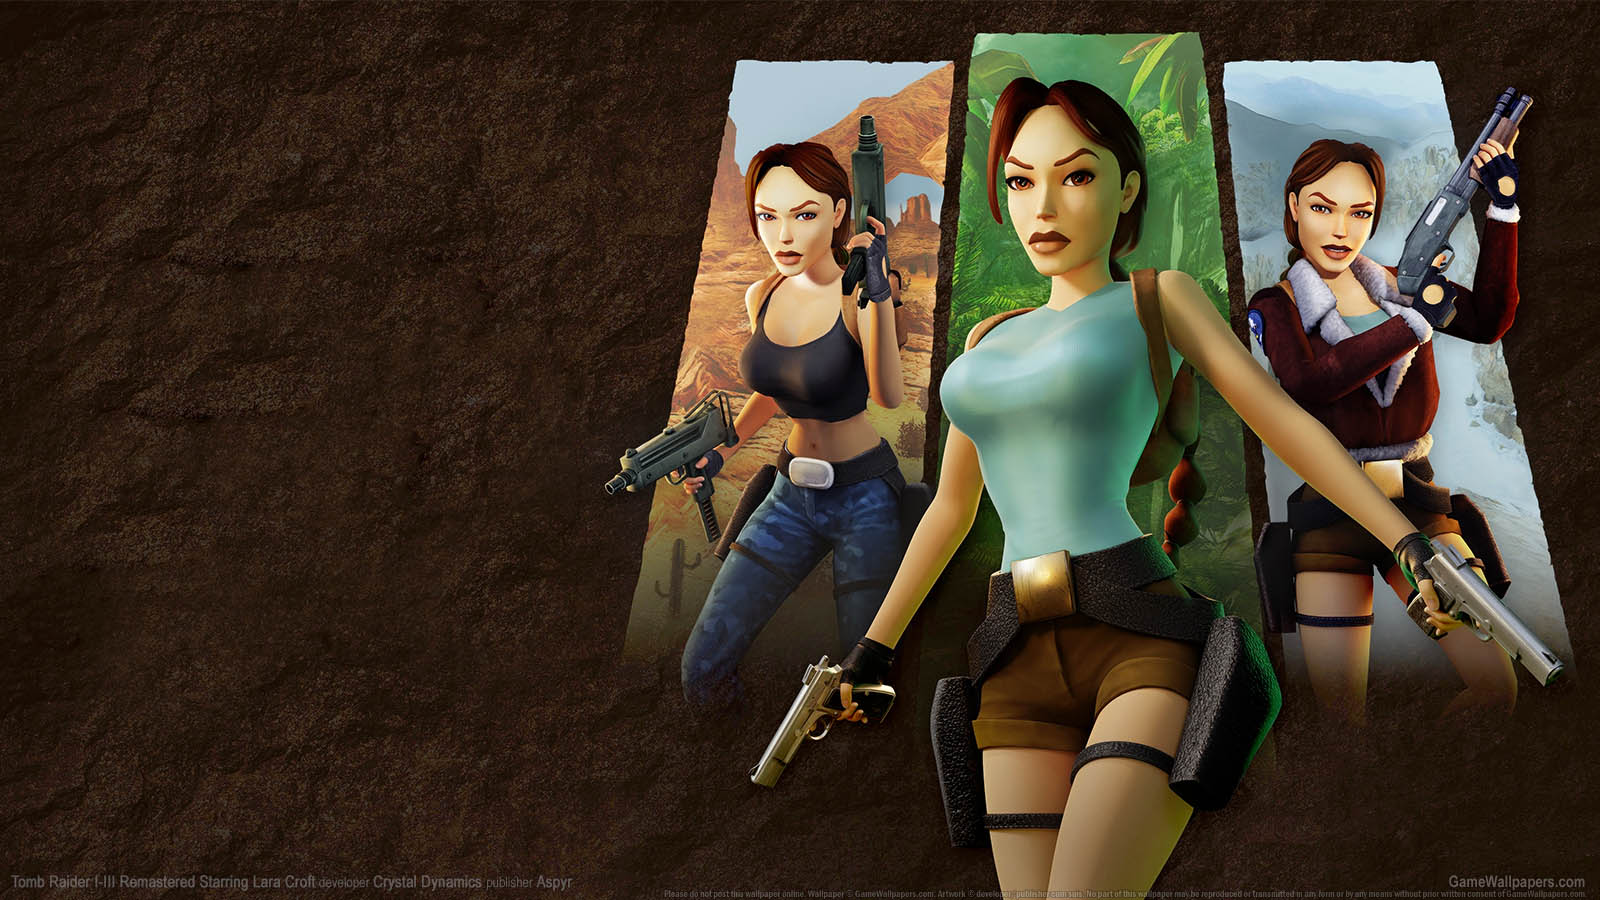 Tomb Raider I-III Remastered Starring Lara Croft wallpaper 01 1600x900